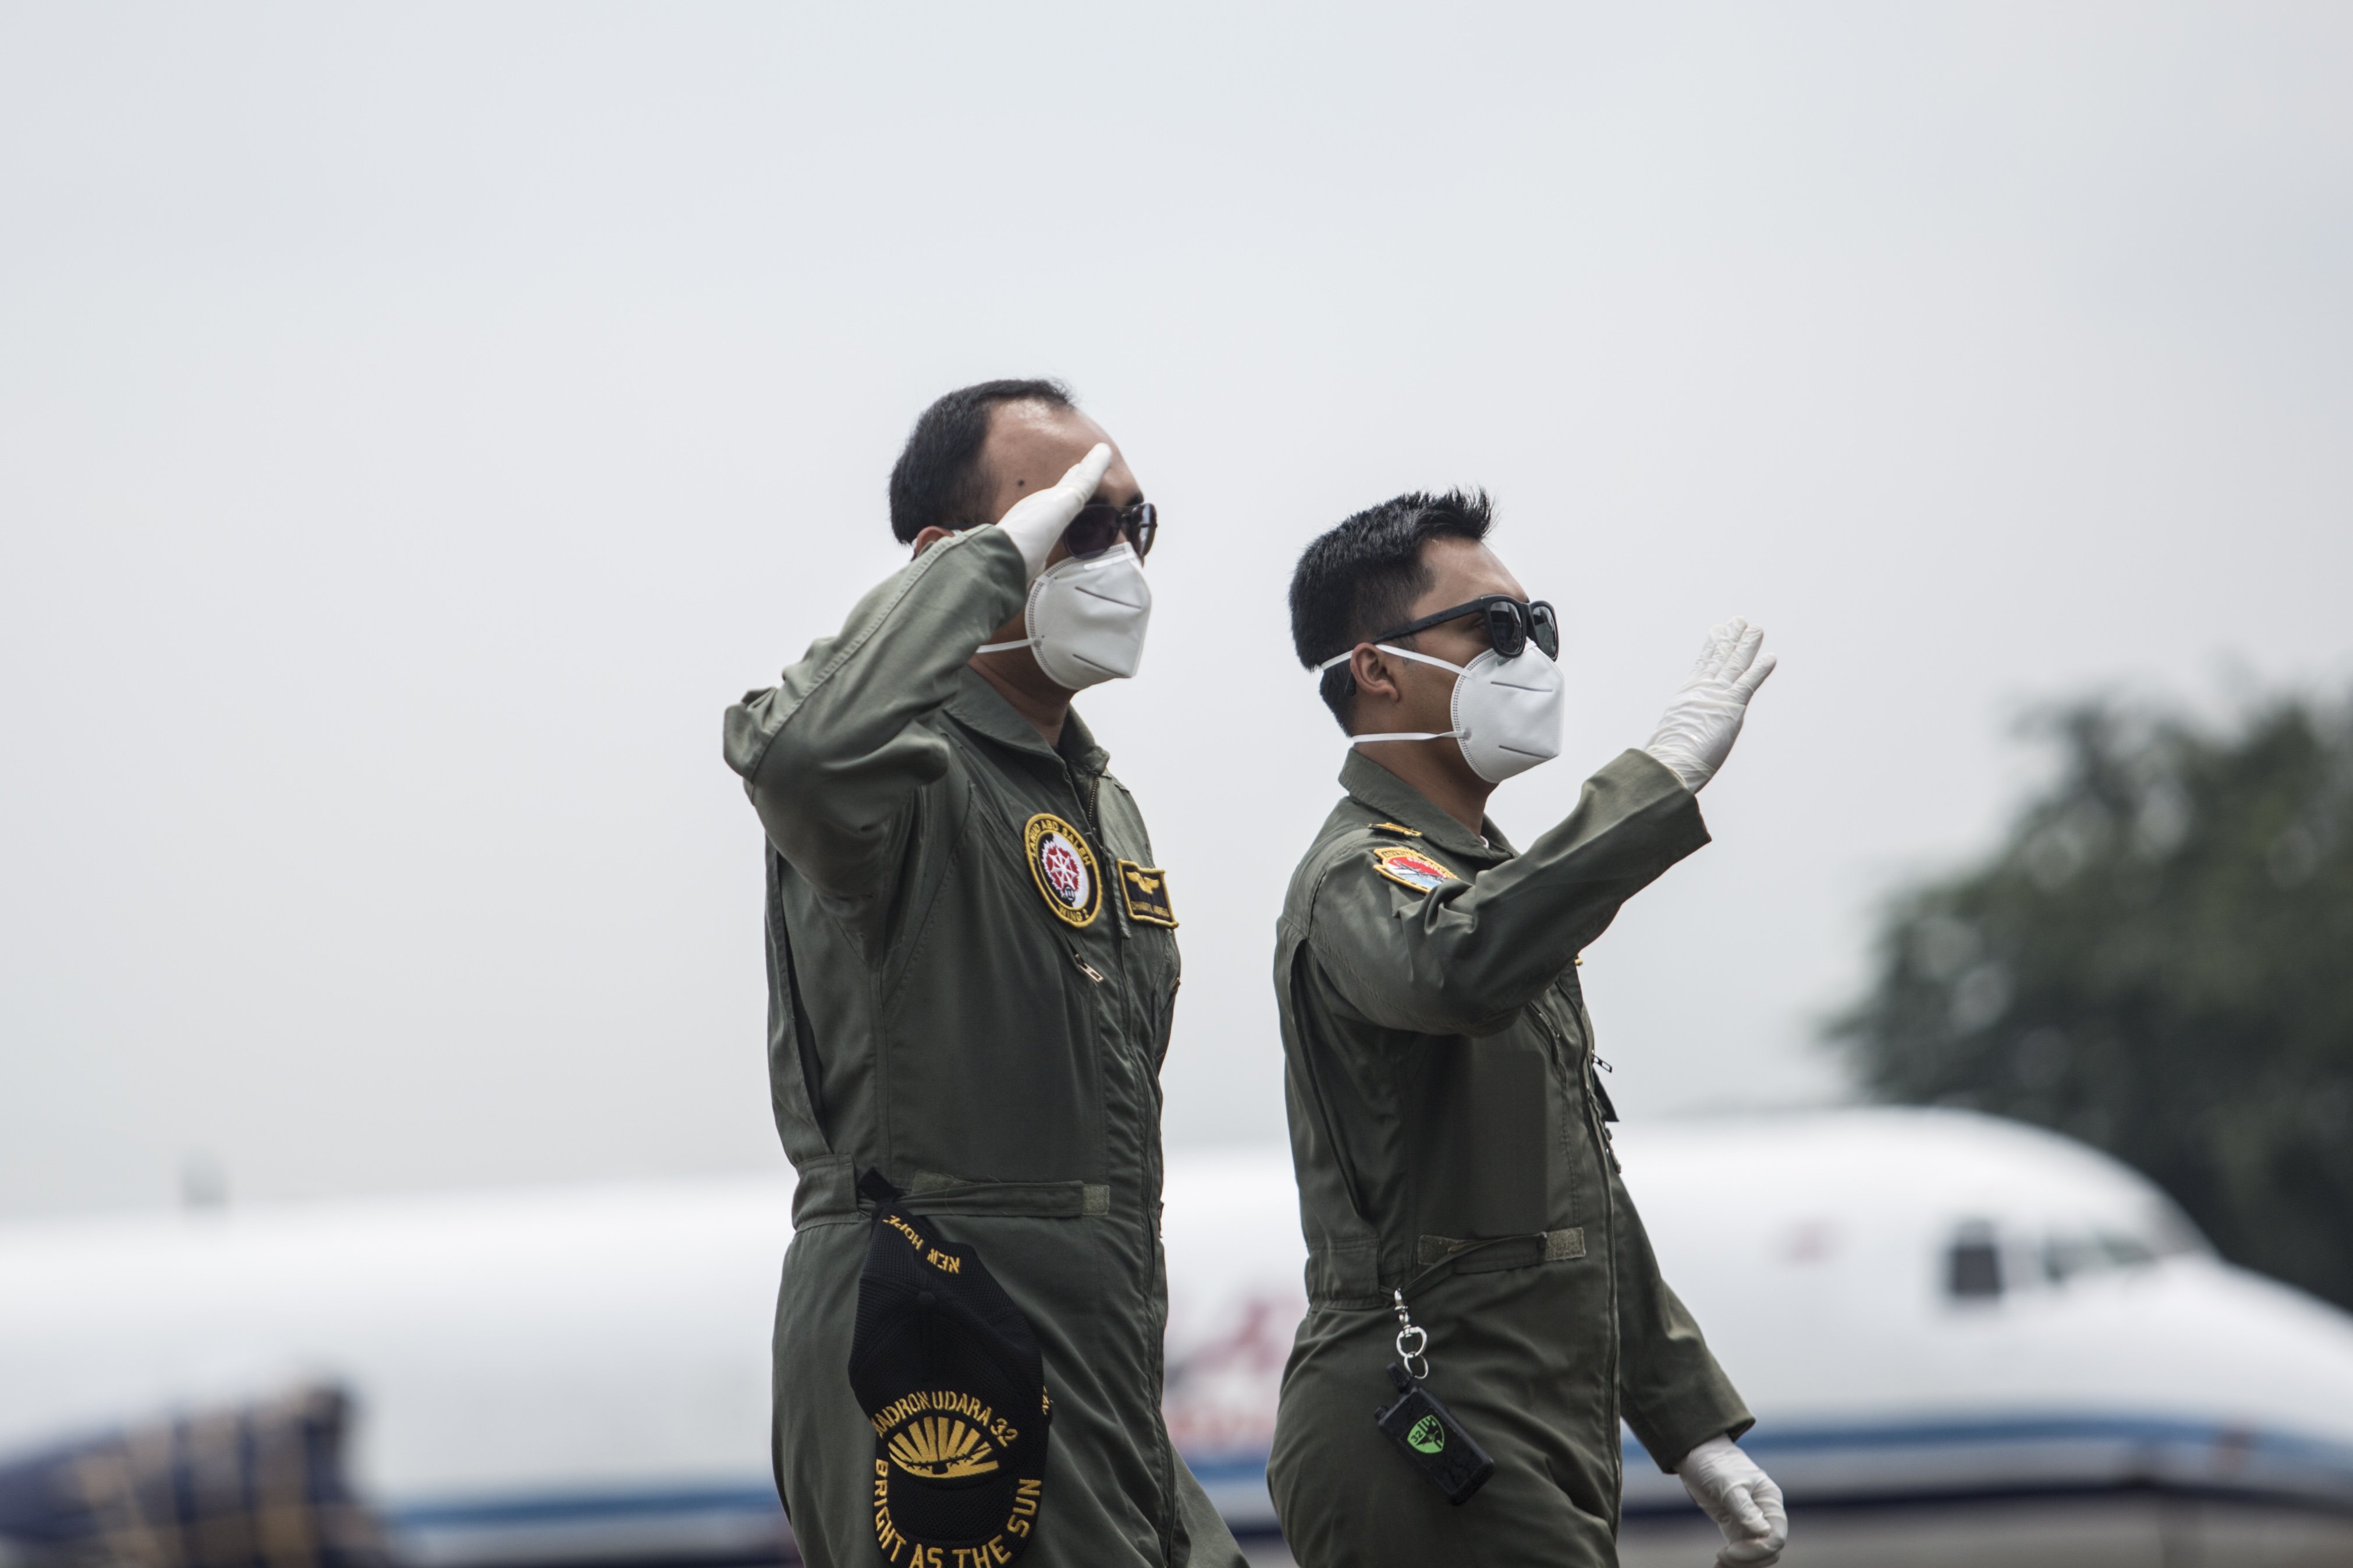 Kru pesawat Hercules C-130 TNI AU pembawa alat kesehatan penanganan Covid-19 dari Shanghai, China tiba di Lanud Halim PerdanaKusumah, Jakarta Timur, Senin (23/3/2020).